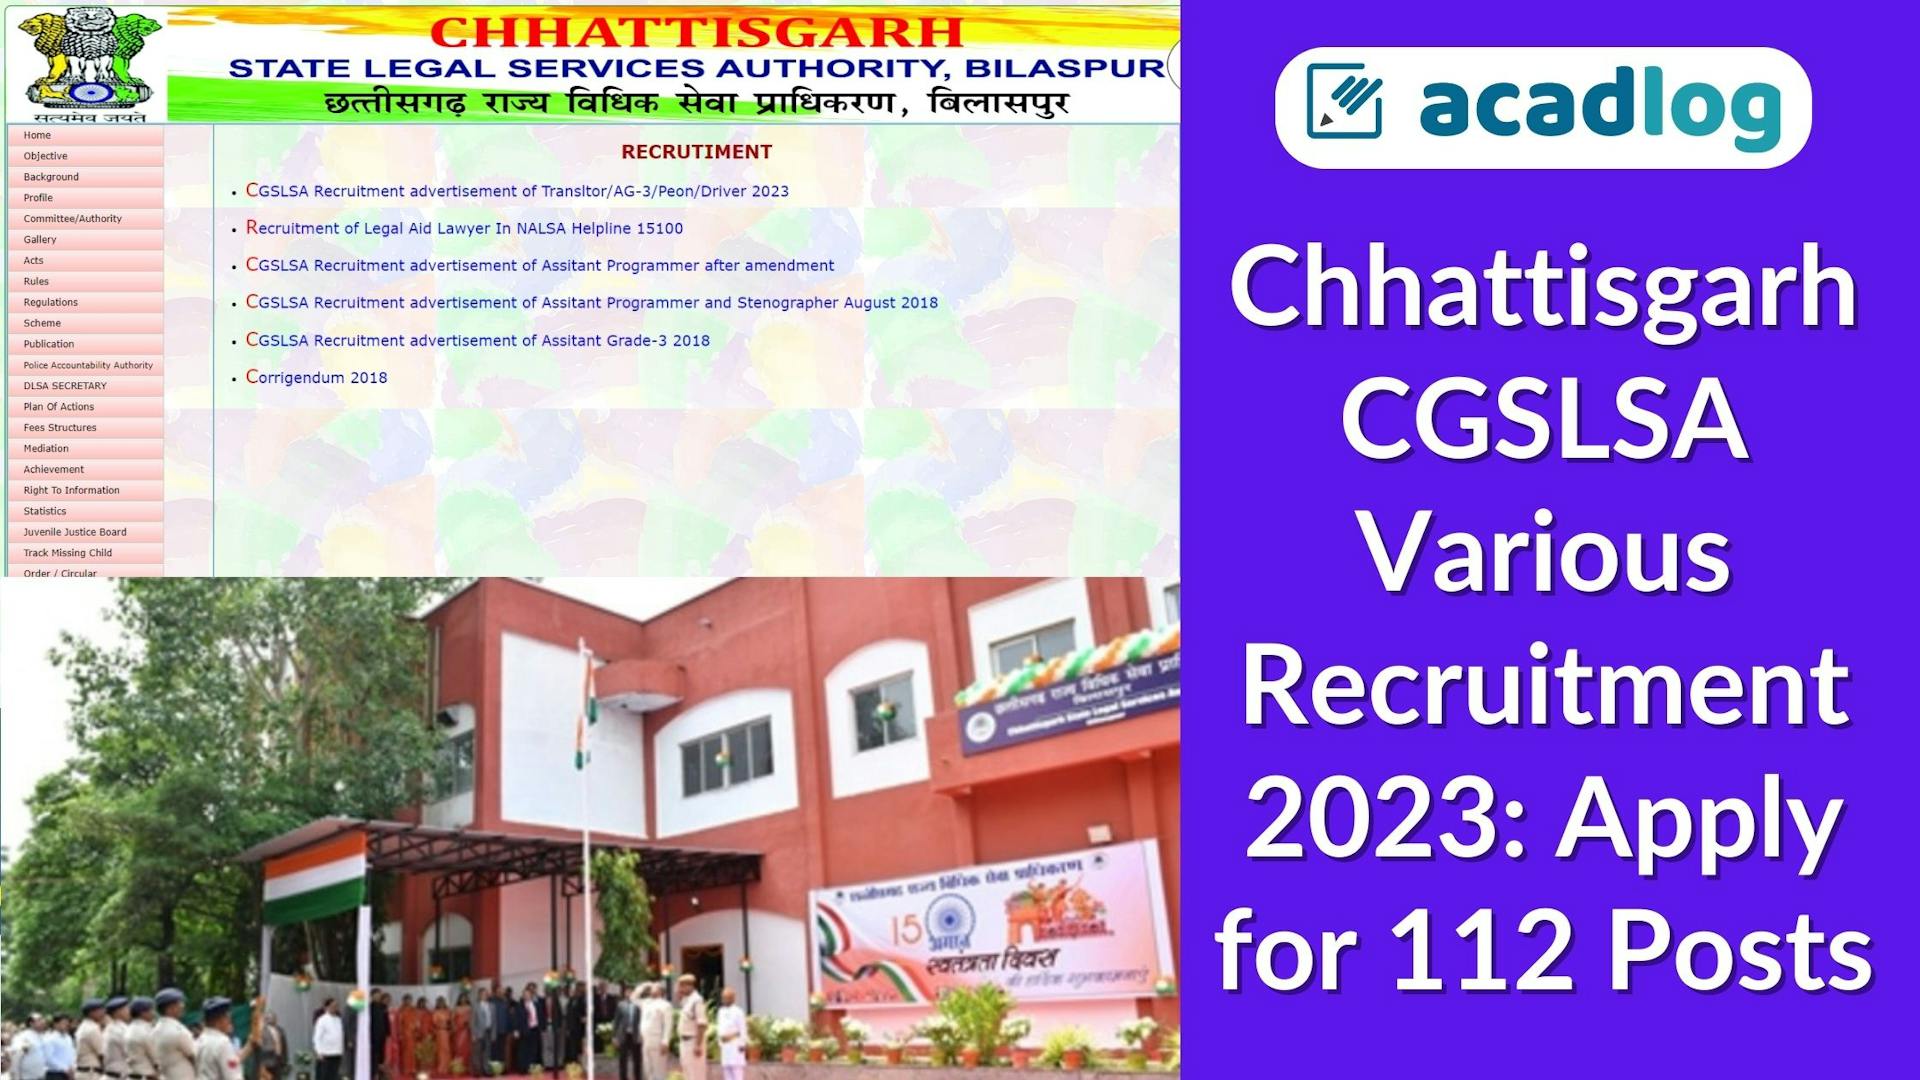 Chhattisgarh CGSLSA Various Recruitment 2023: Apply for 112 Posts